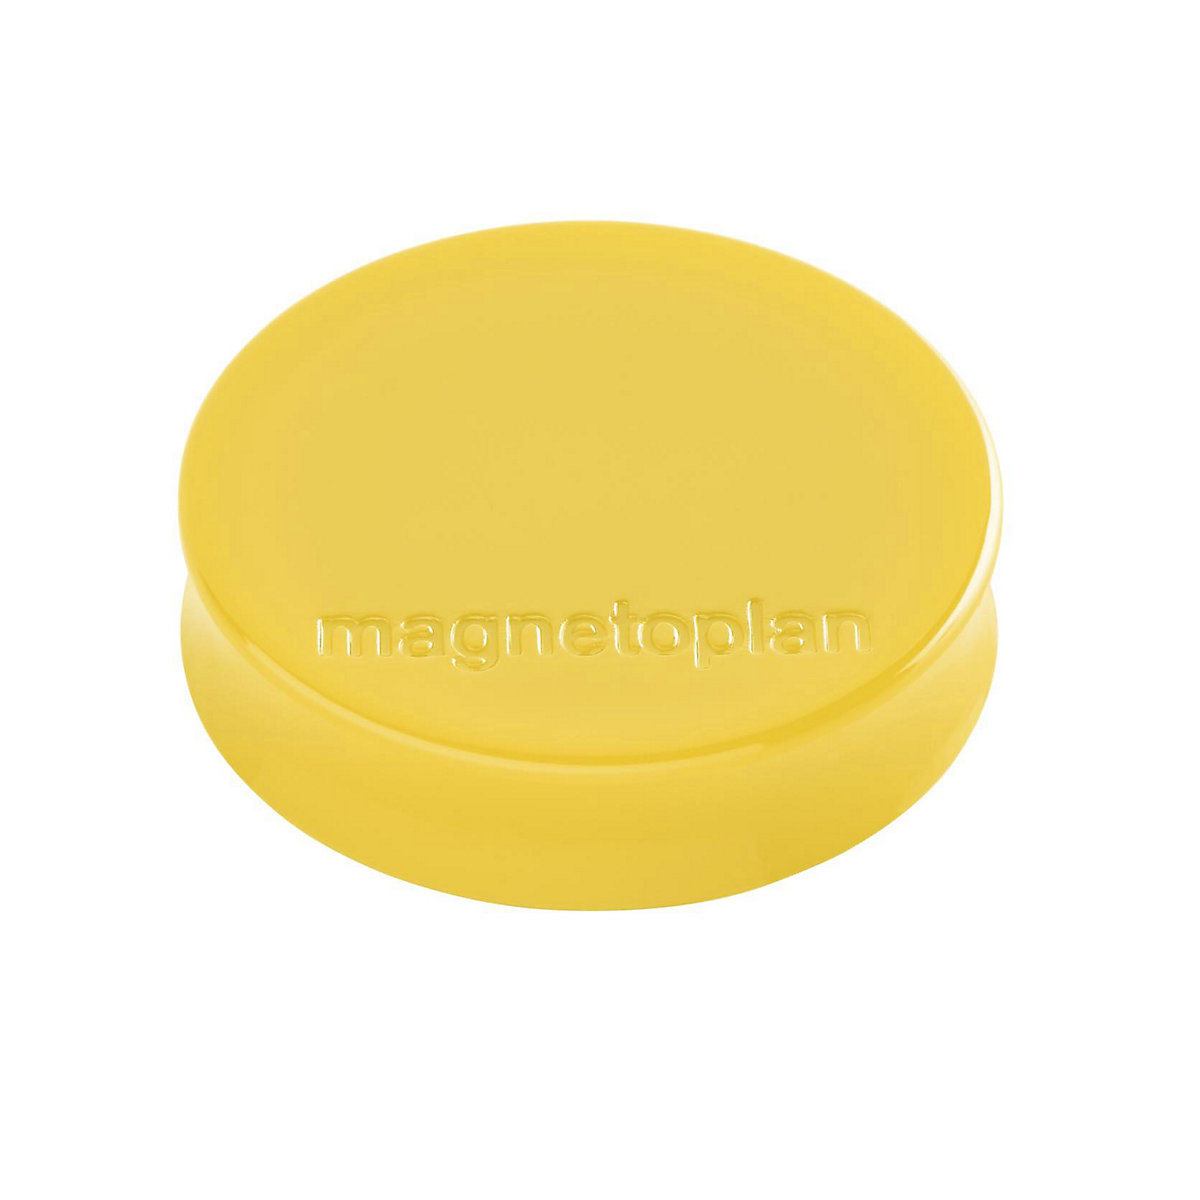 Ergo magnet – magnetoplan, Ø 30 mm, pack of 60, gold yellow-7